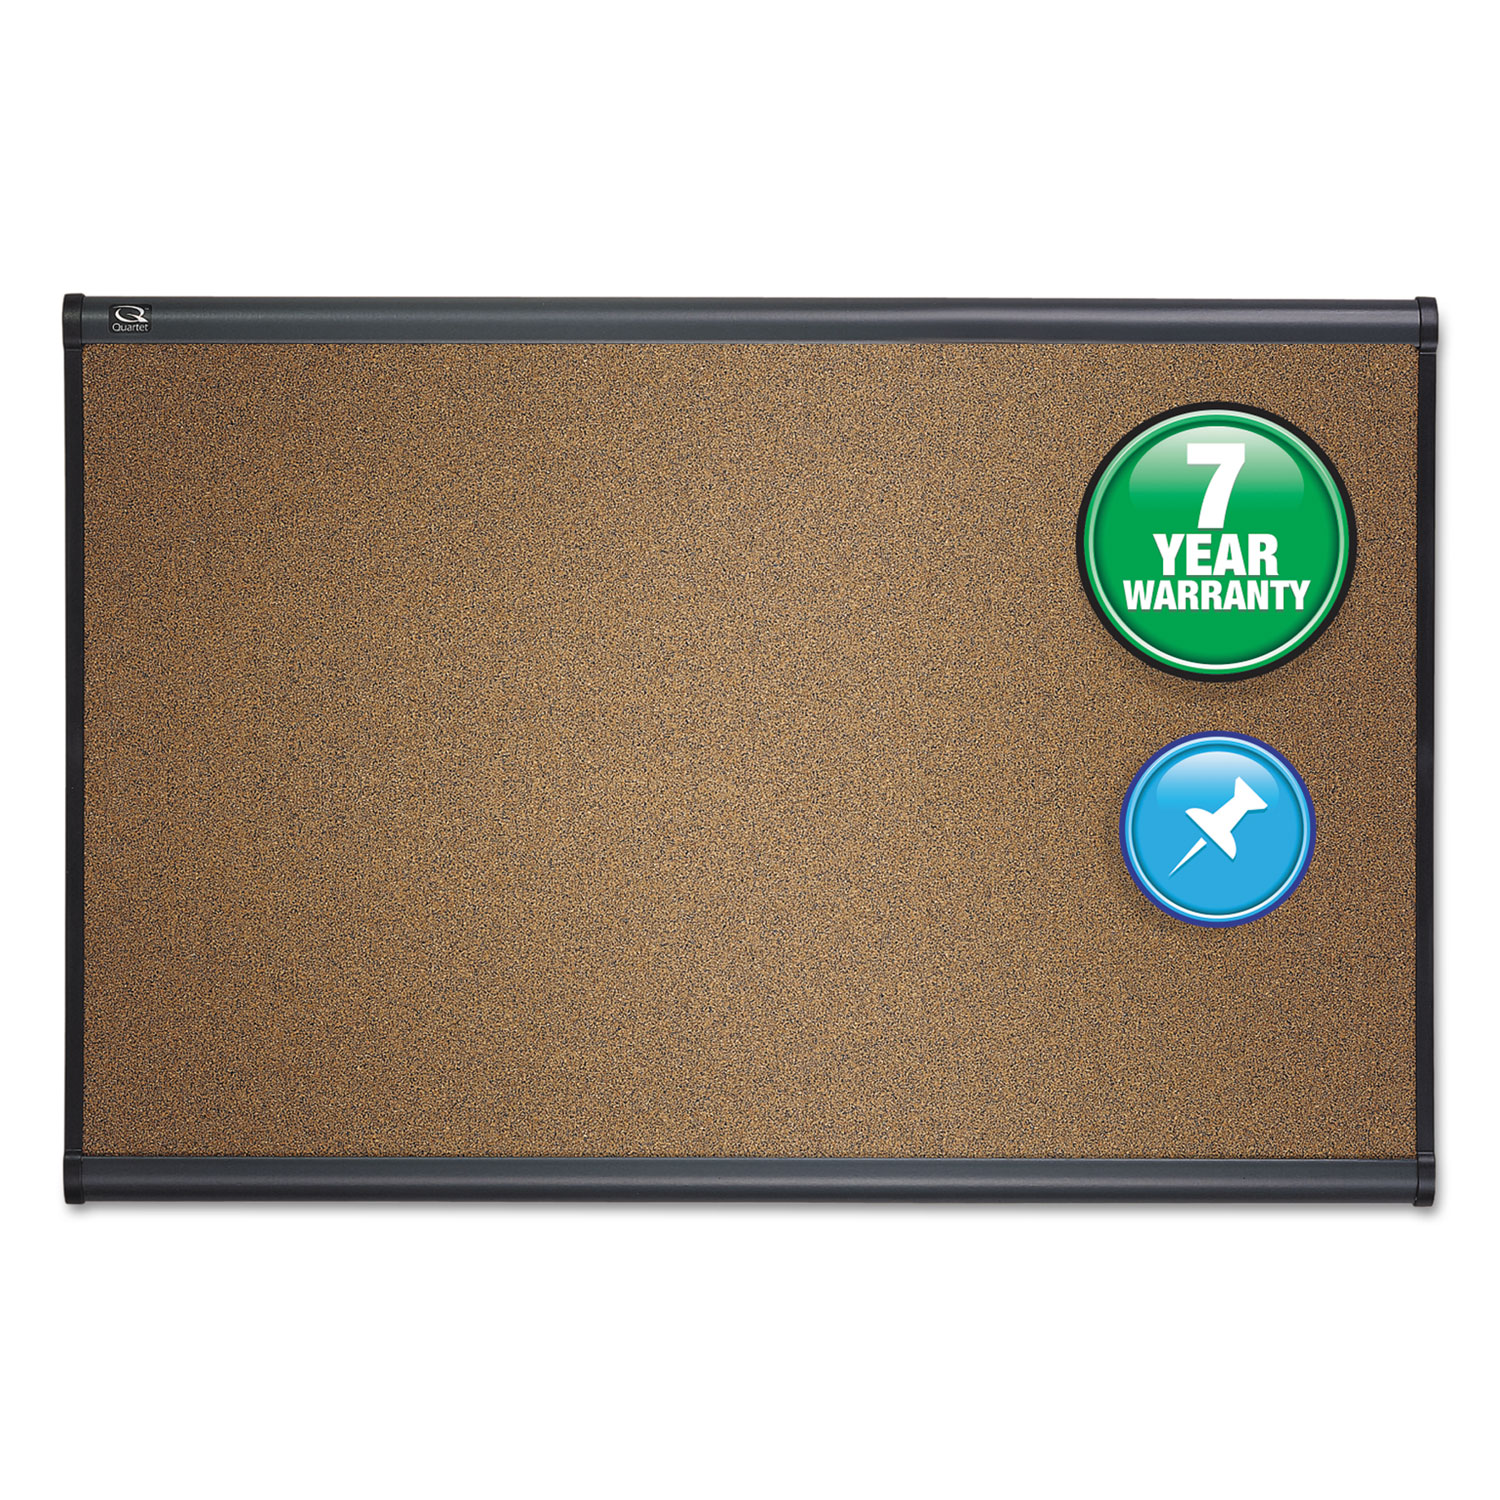  Quartet B247G Prestige Bulletin Board, Brown Graphite-Blend Surface, 72x48, Gry Aluminum Frame (QRTB247G) 